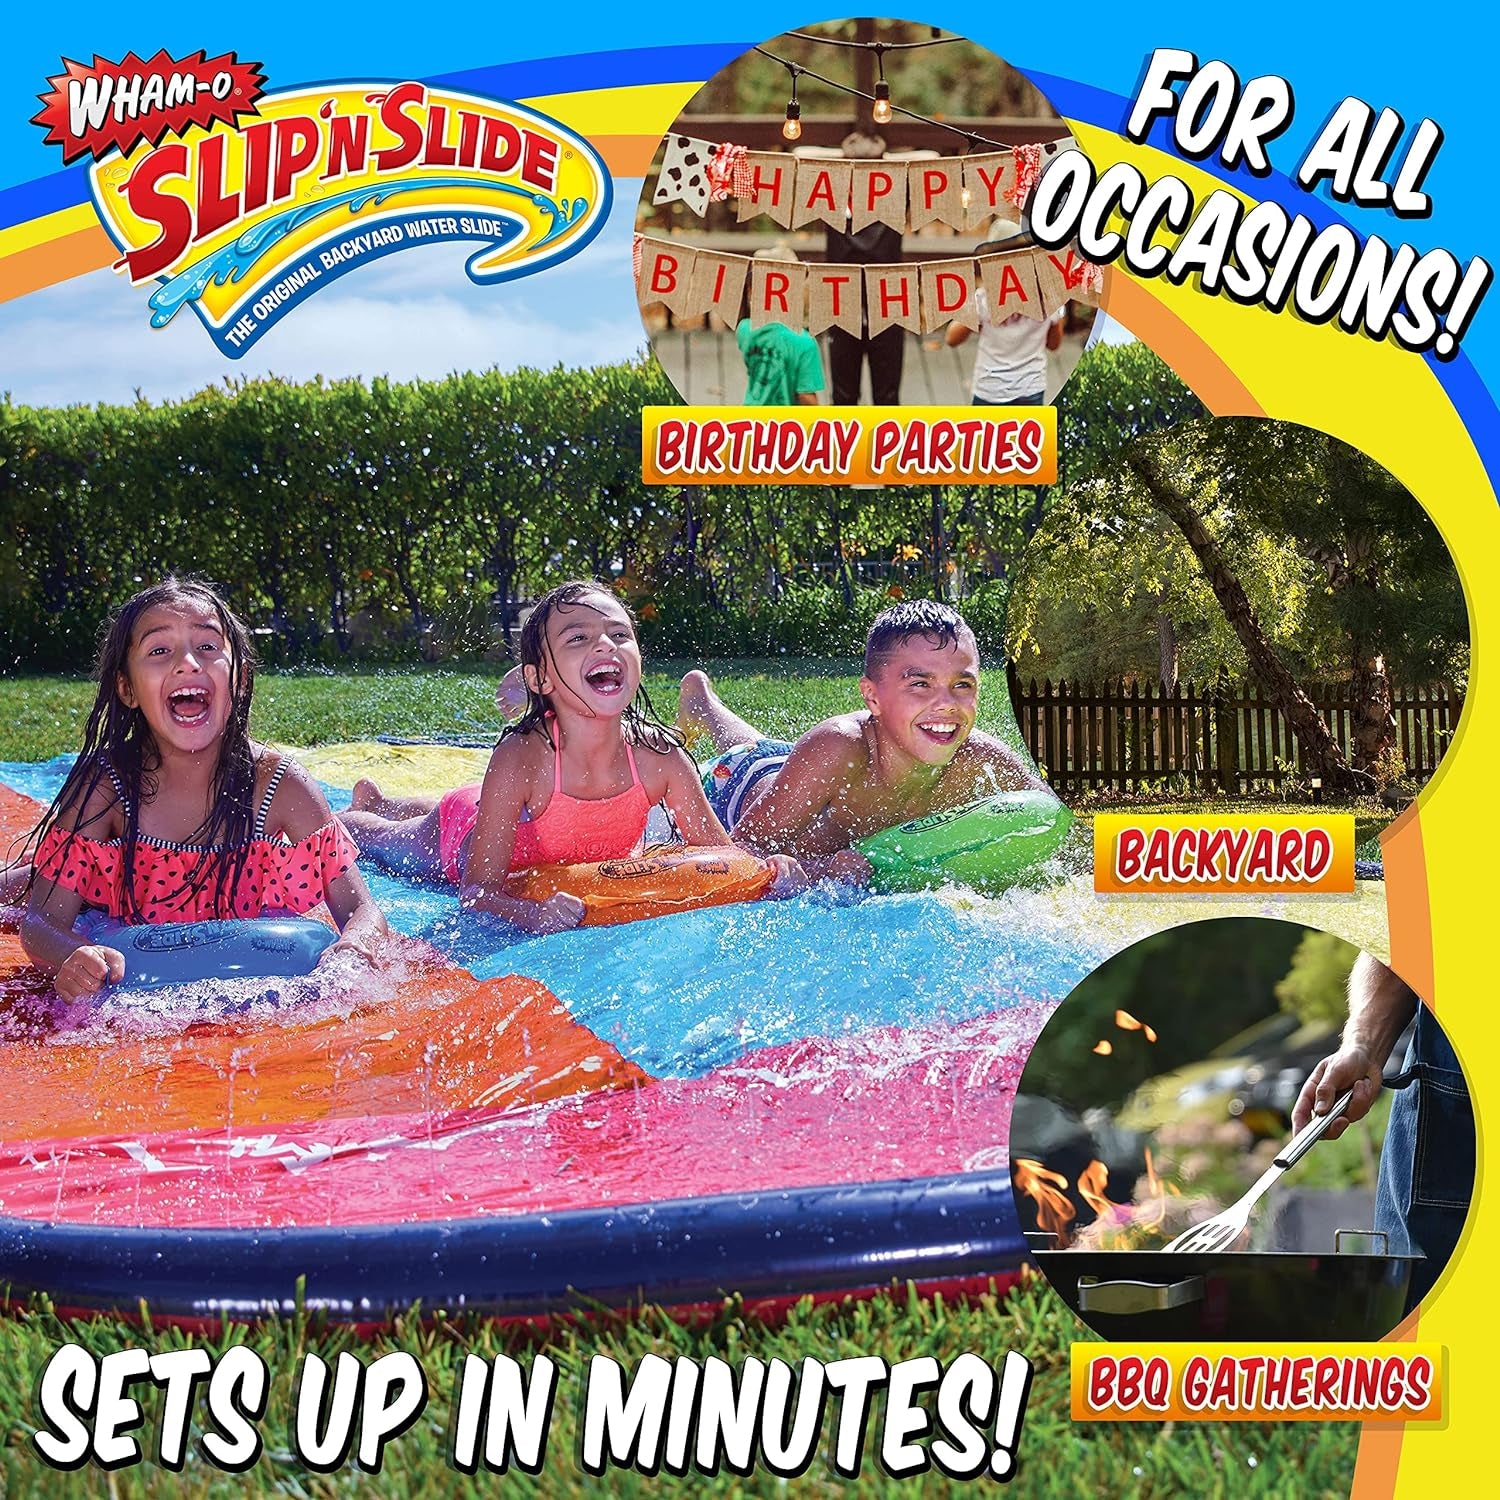 Slip N' Slide Triple Racer with Slide Boogie Board